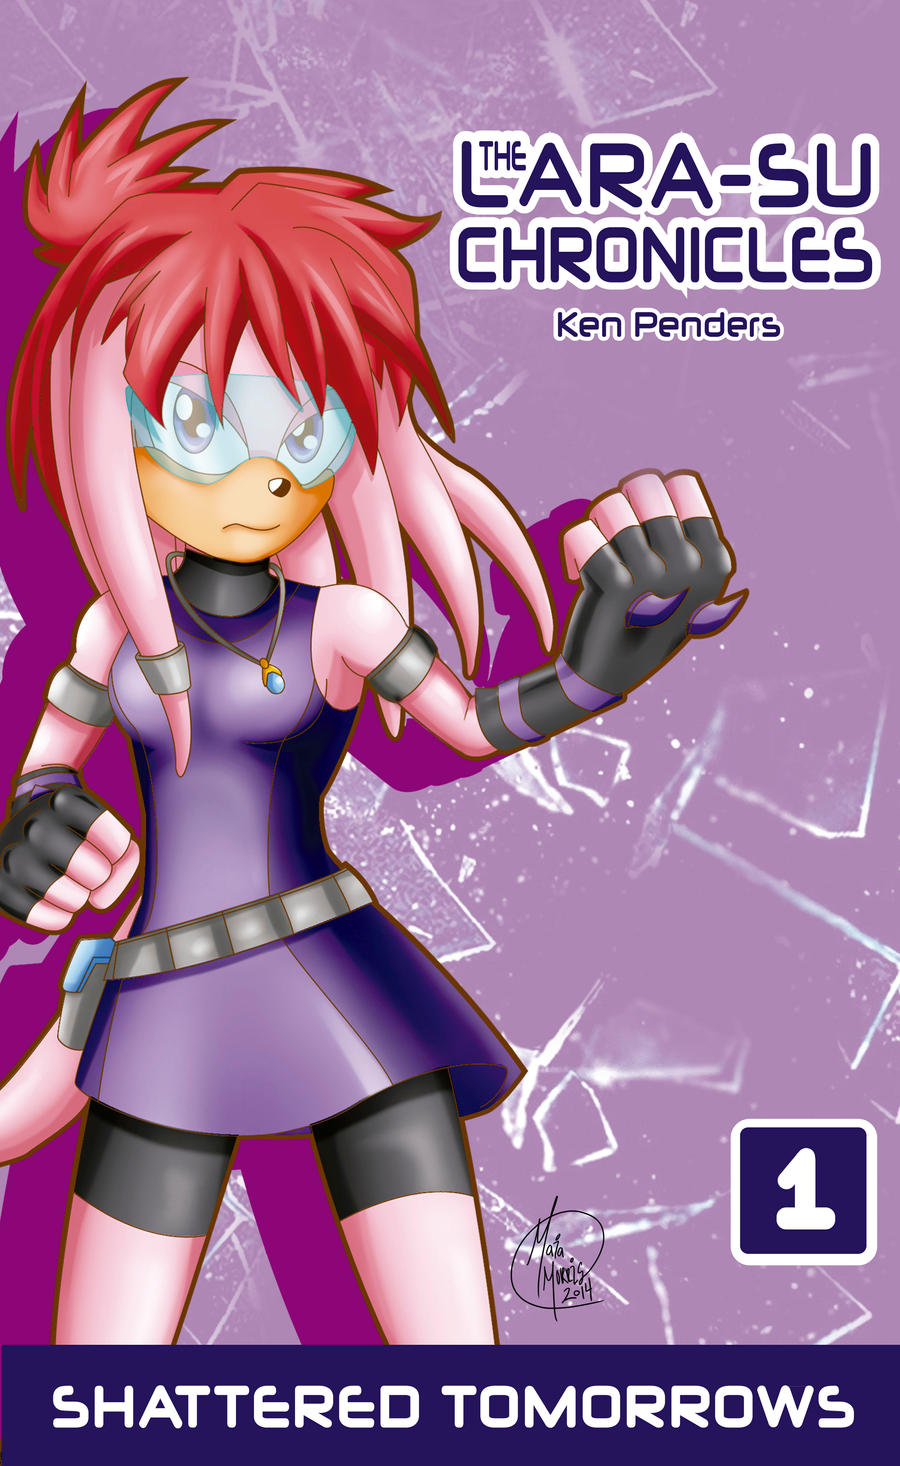 Lara-Su -- Sonic Channel by legyolk on DeviantArt